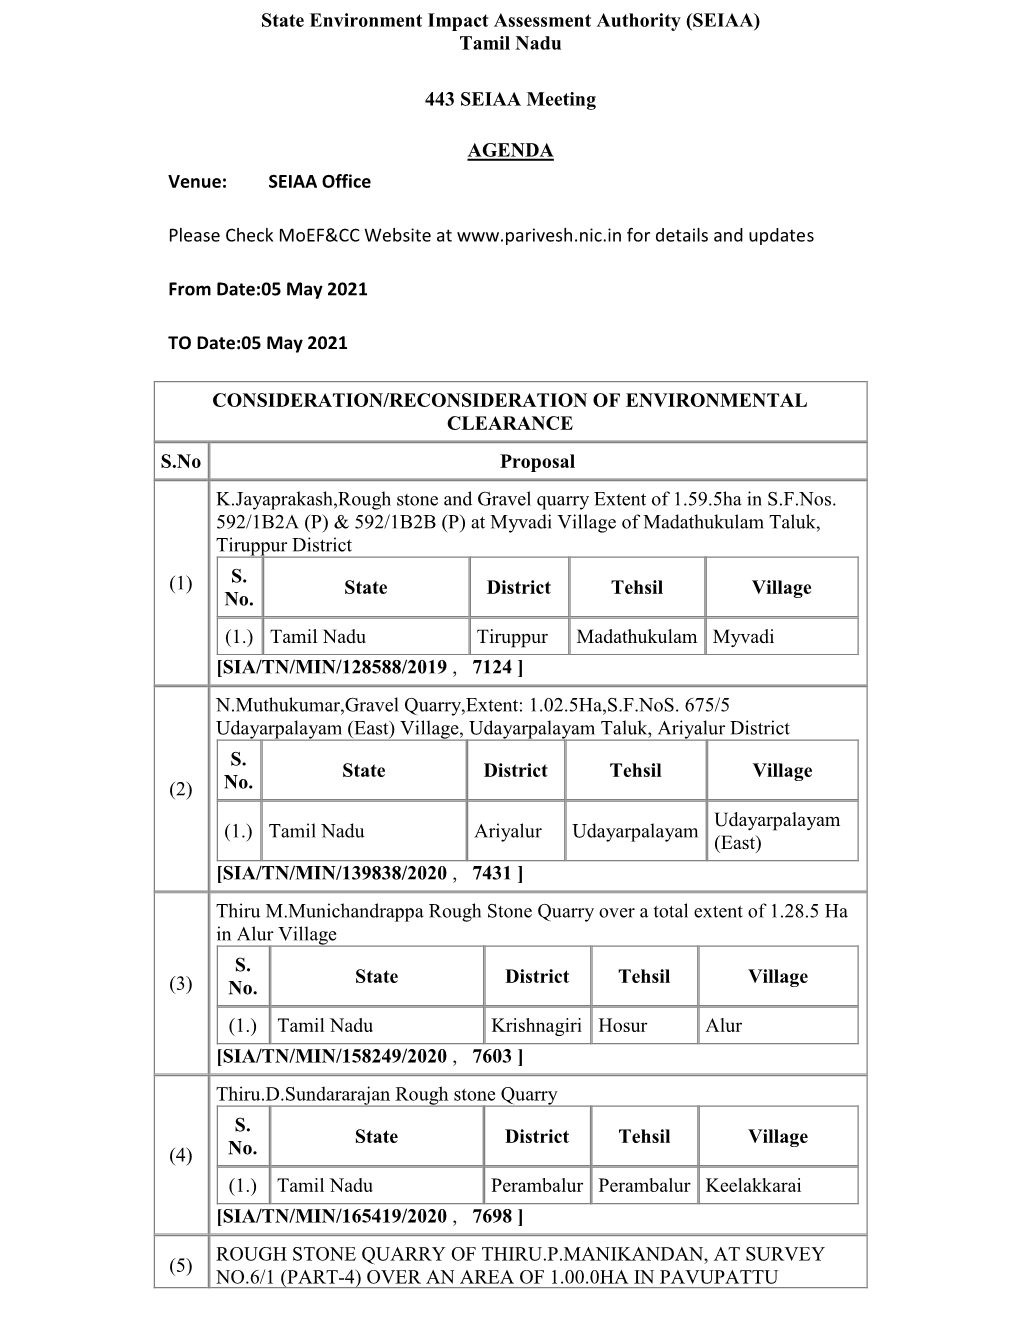 State Environment Impact Assessment Authority (SEIAA) Tamil Nadu 443